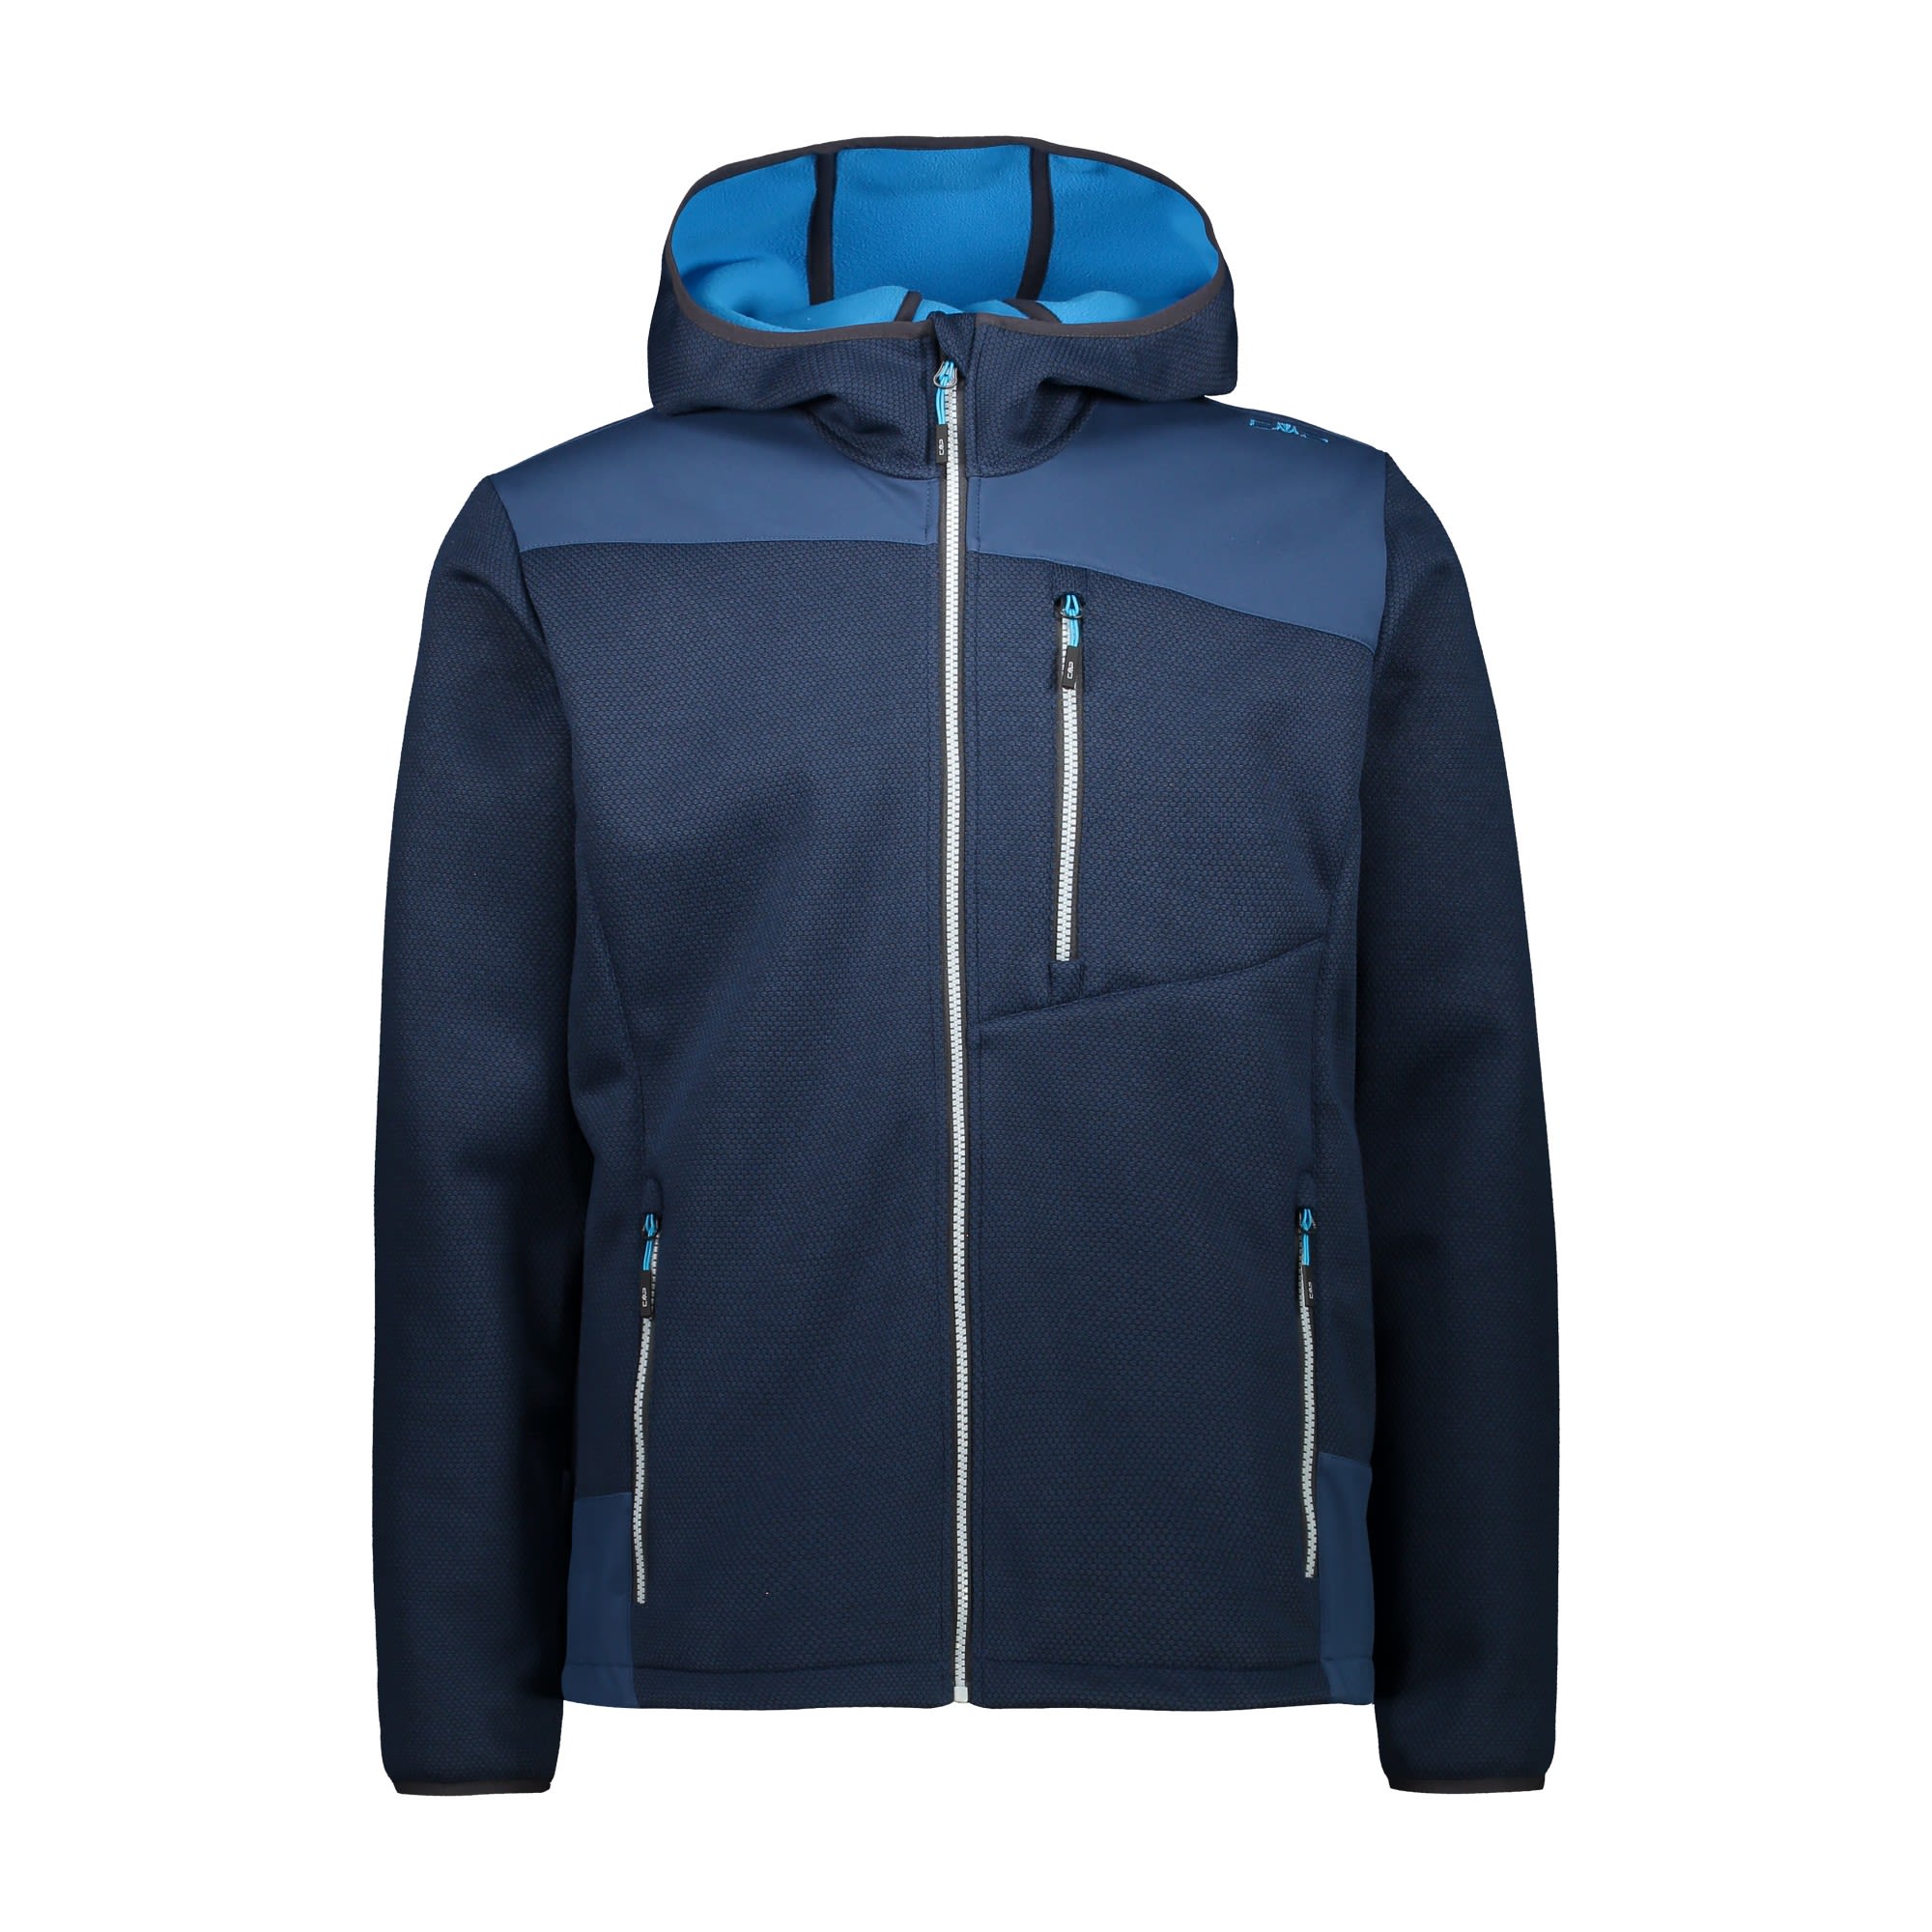 CMP Jacket FIX Hood Jacquard Blau- Male Ponchos und Capes- Grsse 48 - Farbe Blue Ink unter CMP